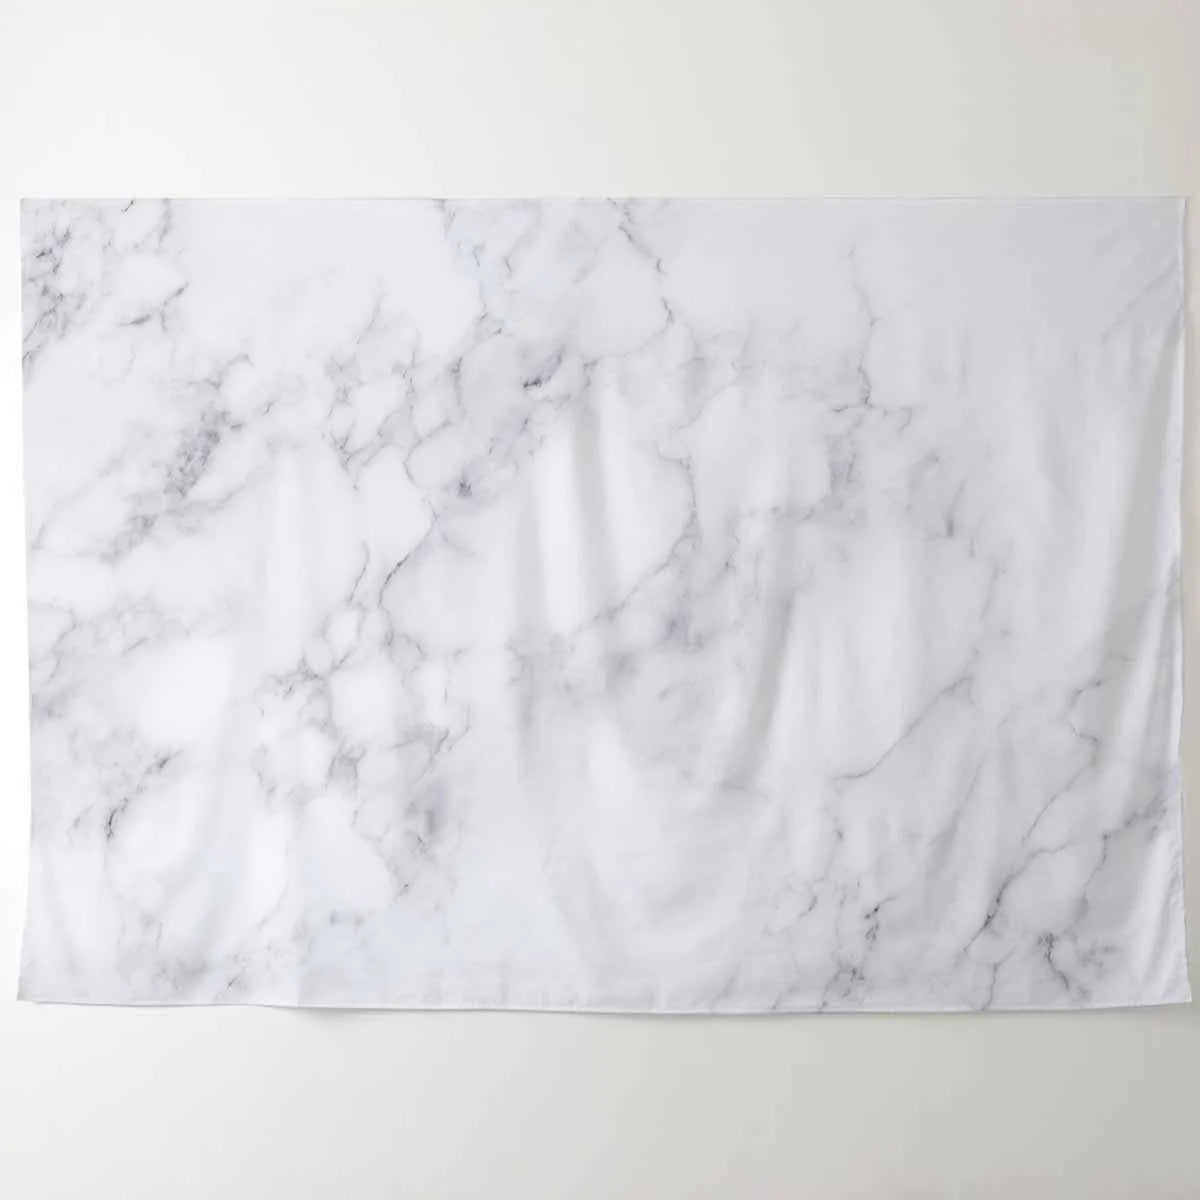 Allenjoy Photographic Background  modern white marble texture Backdrop - Allenjoystudio